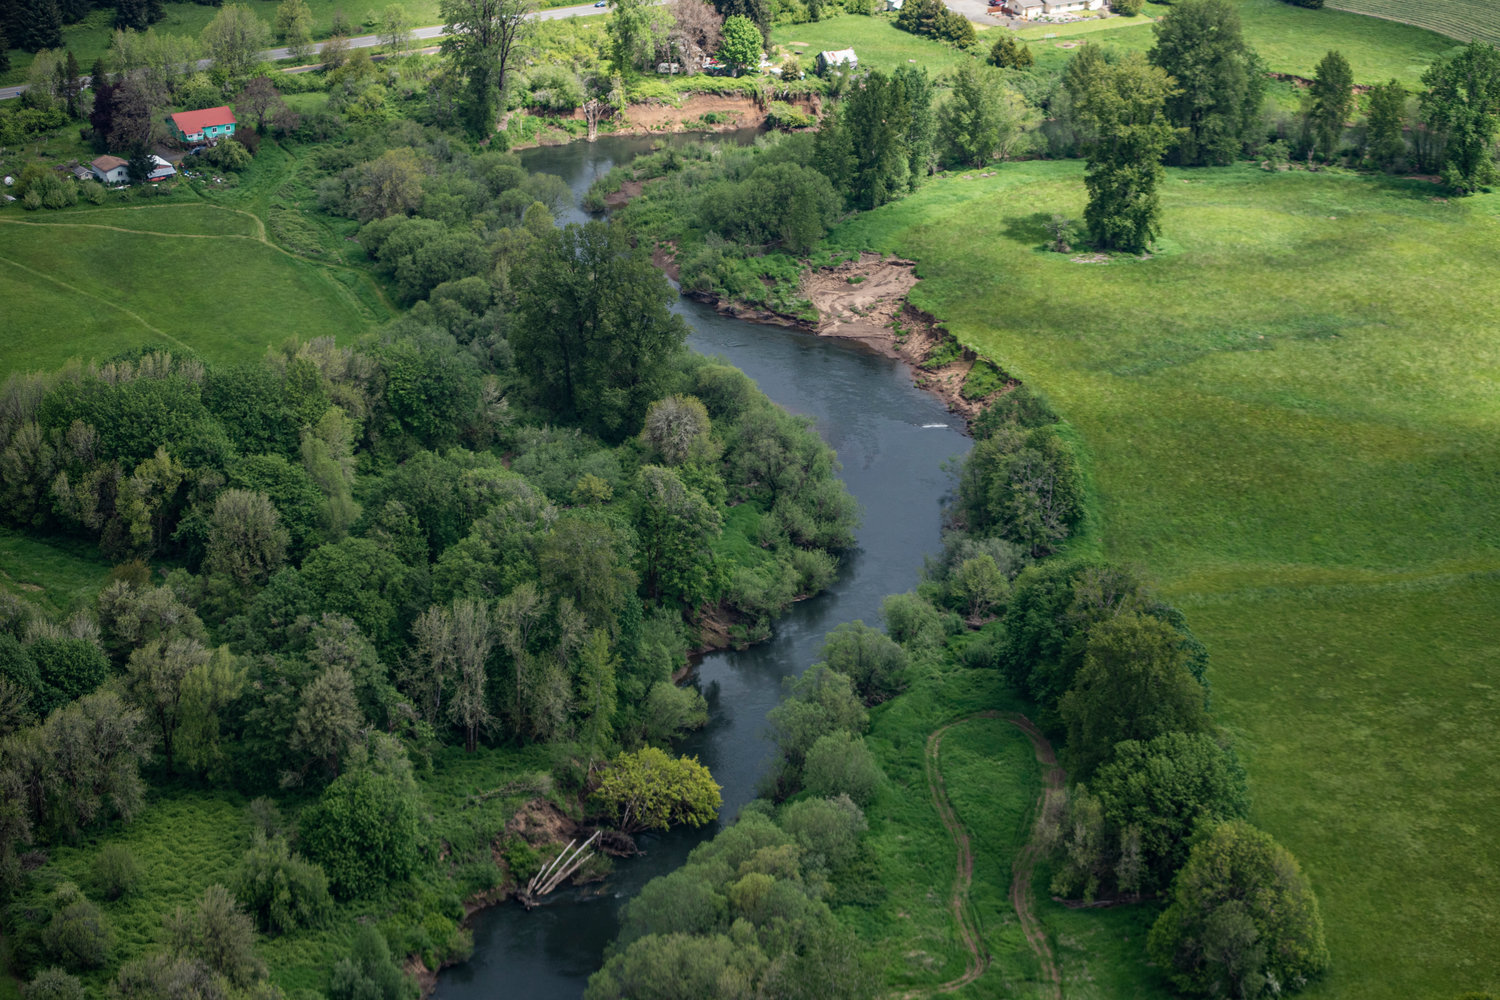 The Chehalis River runs through farmland near Doty and Dryad.